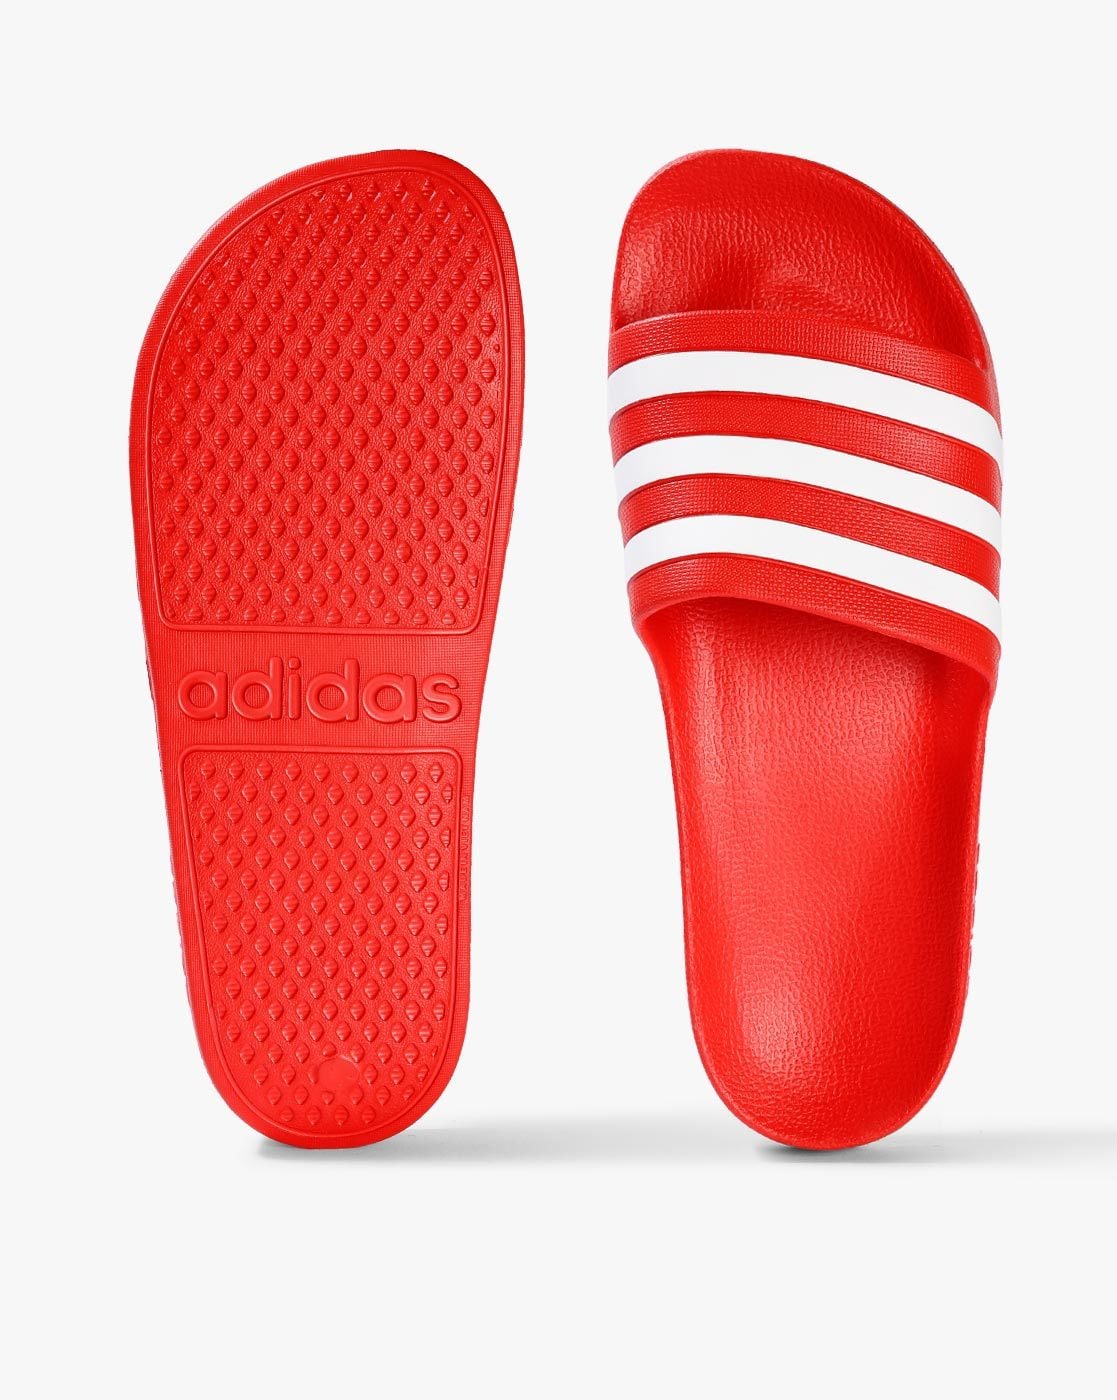 red adidas scuffs